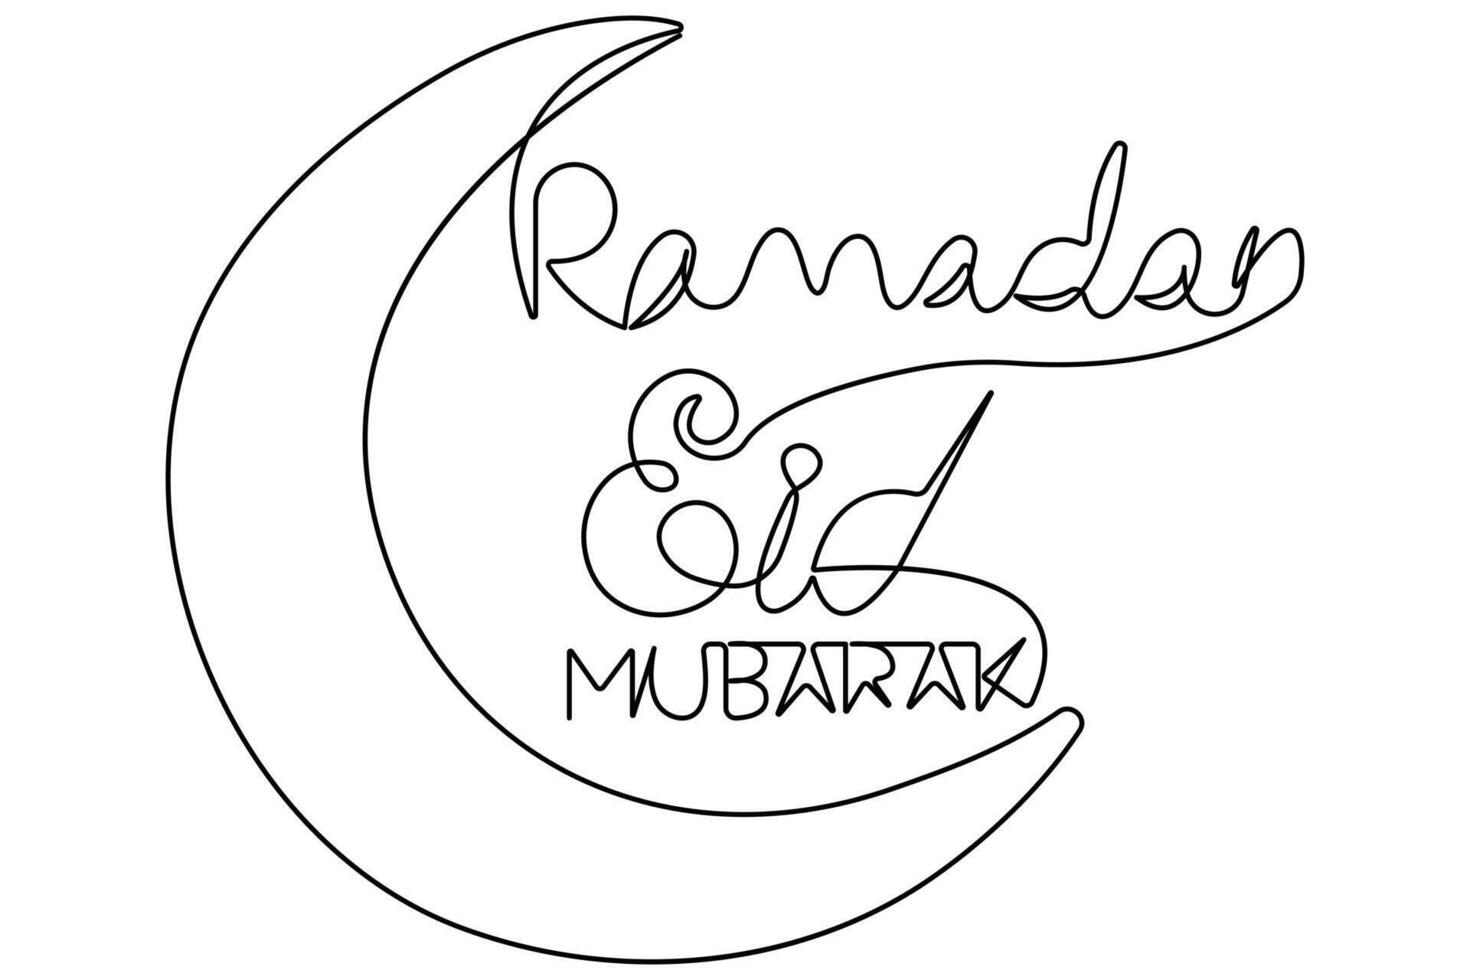 Islamic decoration concept Ramadan Kareem continuous one line art drawing of Eid Mubarak vector illustration